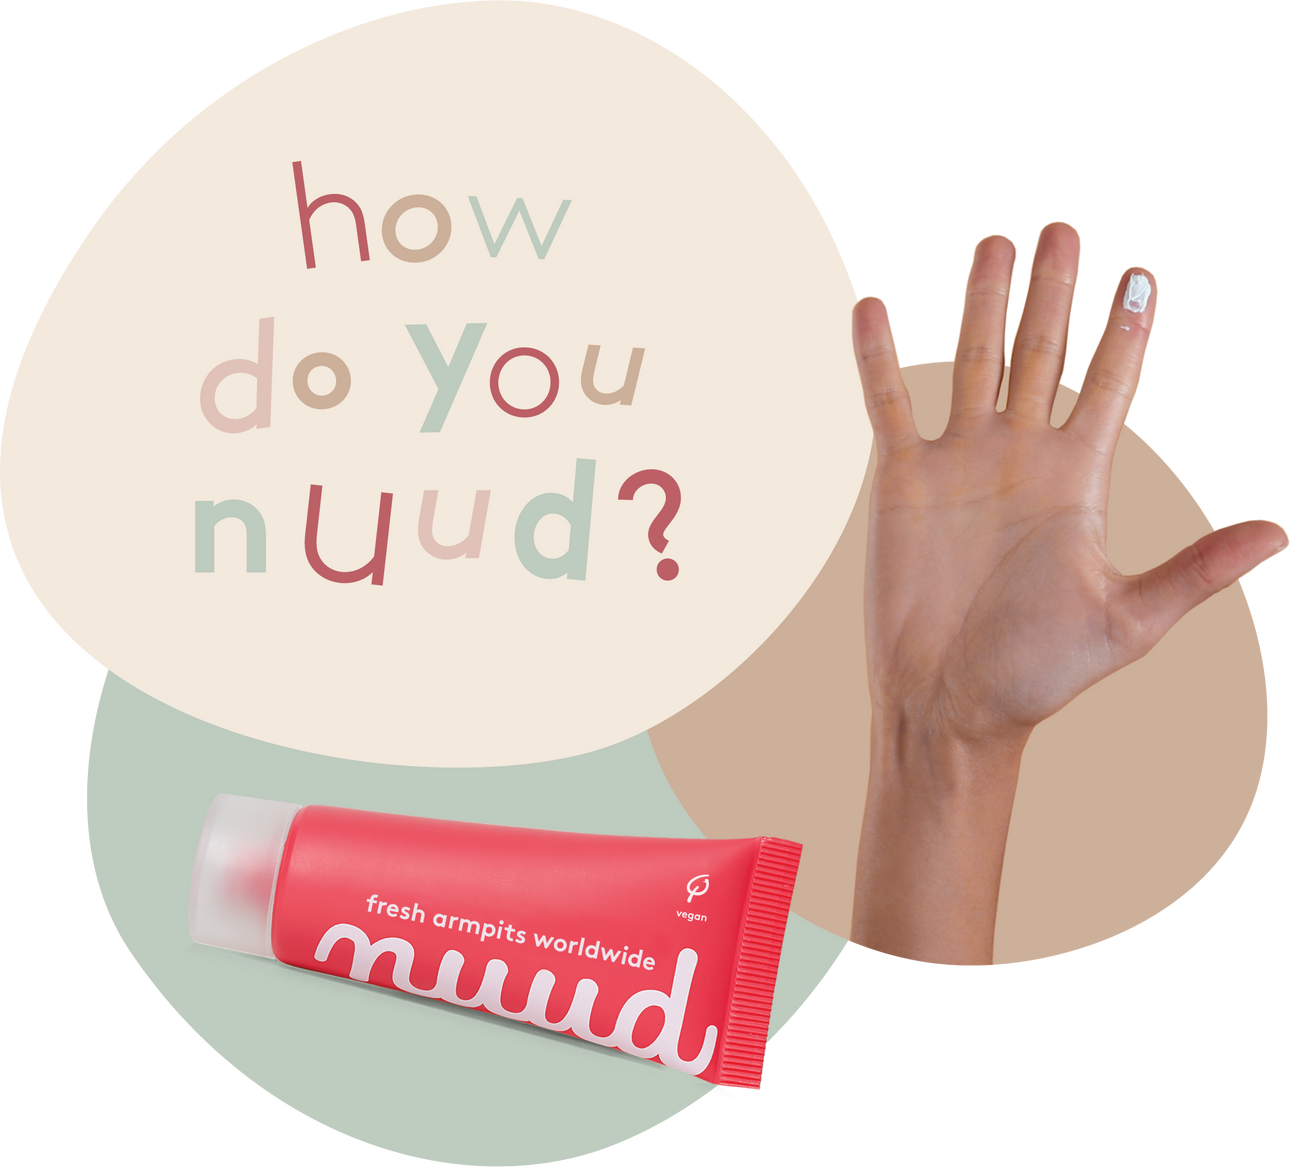 How do you nuud?